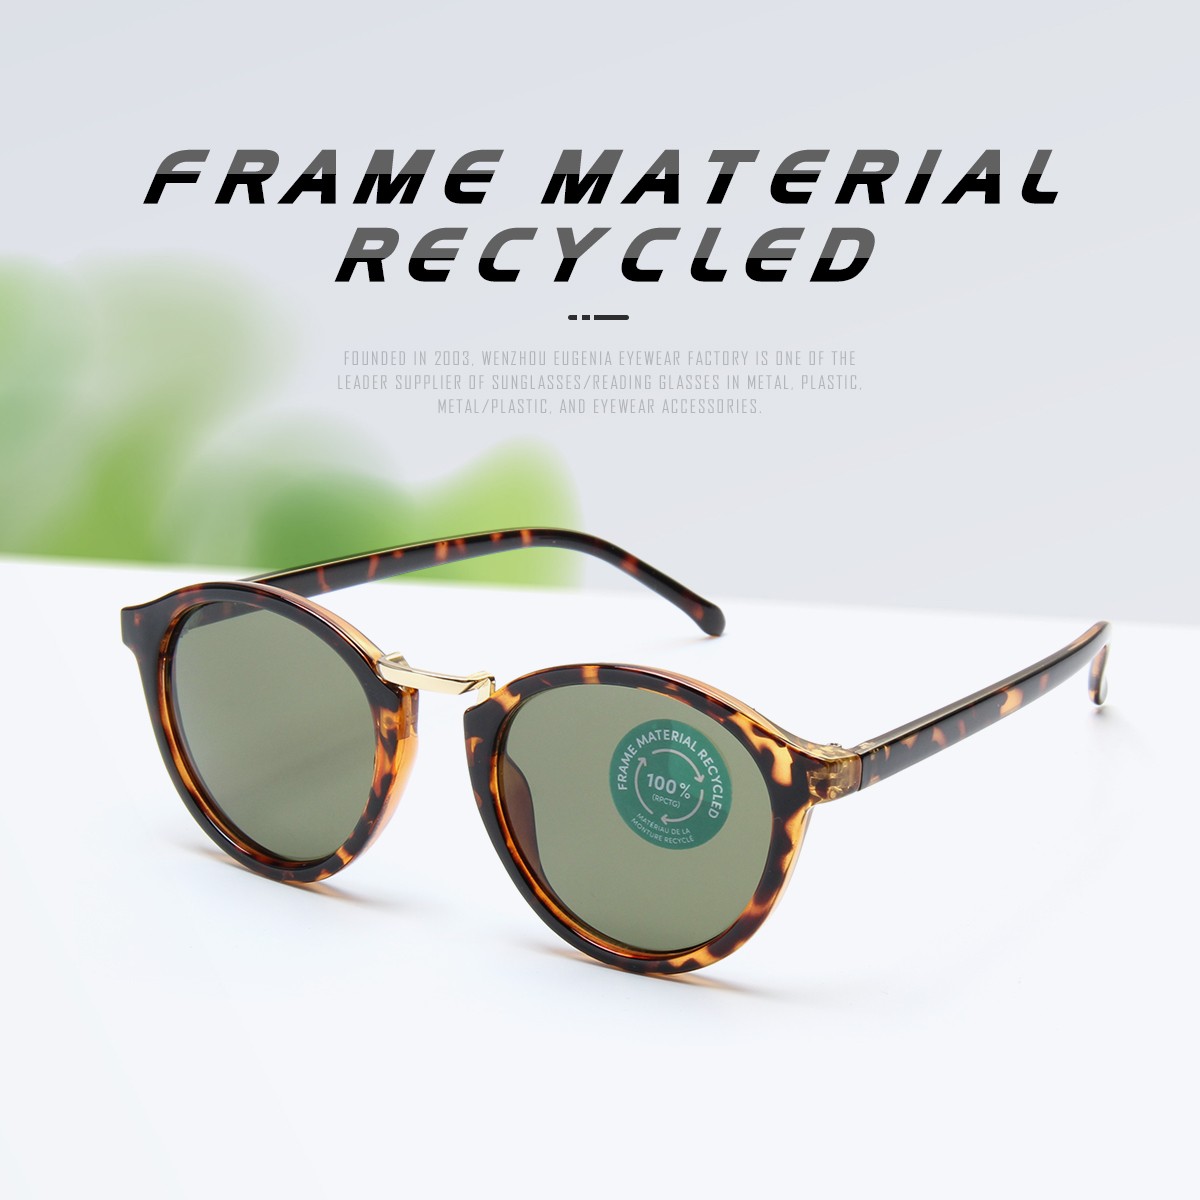 Eugenia environmentally friendly sunglasses marketing for recycle-1